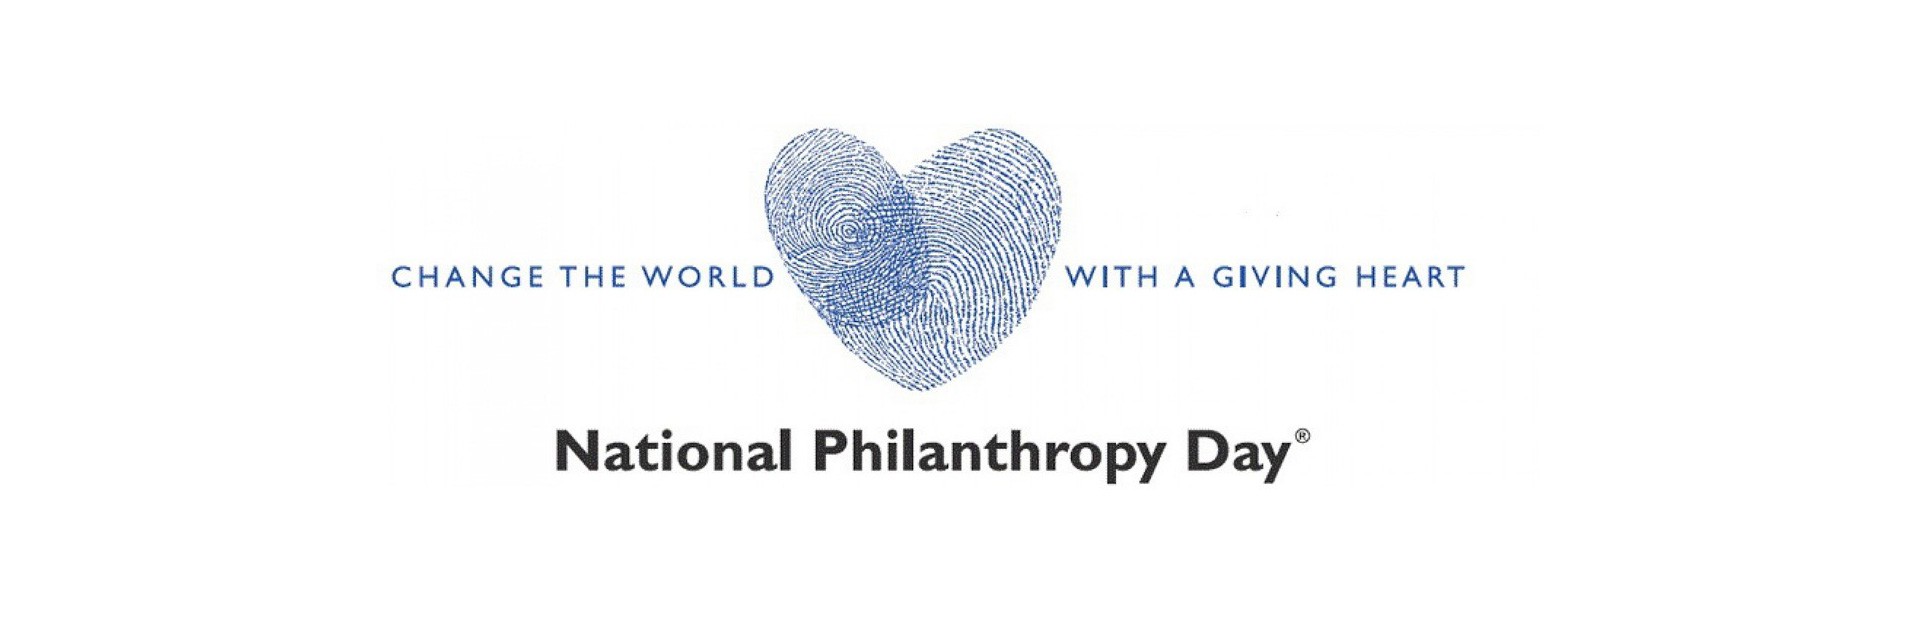 National Philanthropy Day 2020